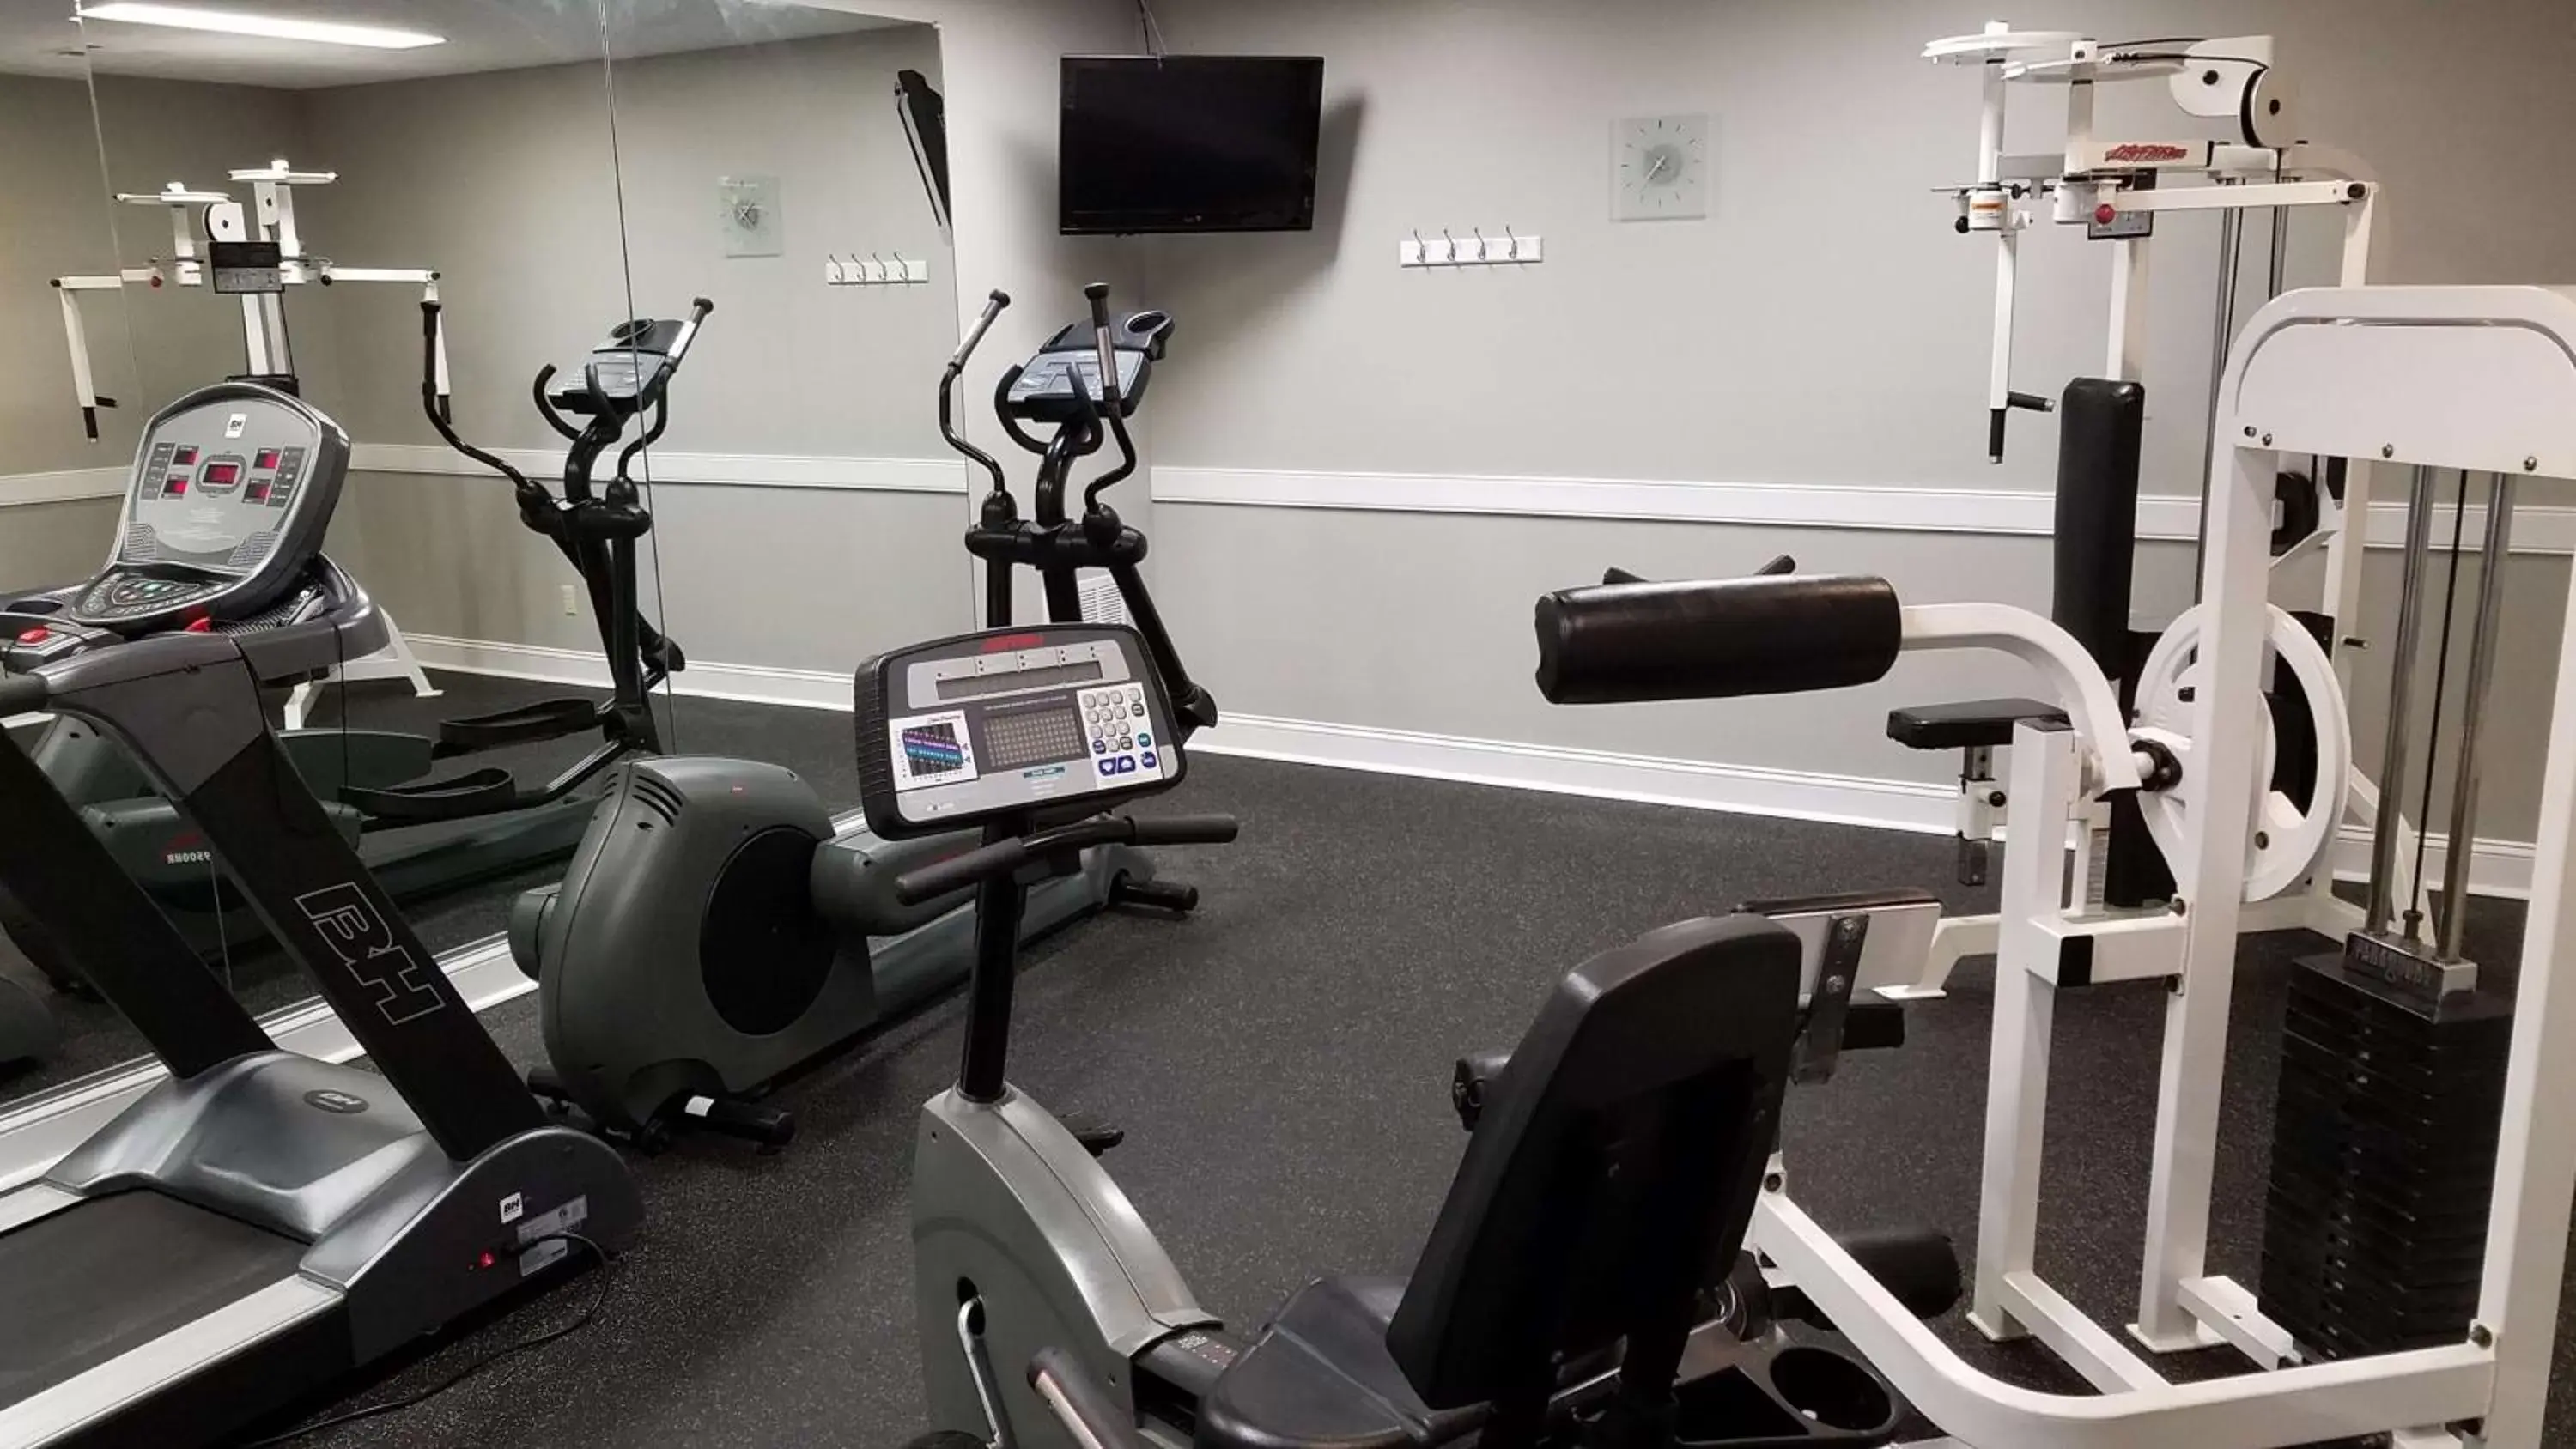 Fitness centre/facilities, Fitness Center/Facilities in Best Western Auburn/Opelika Inn